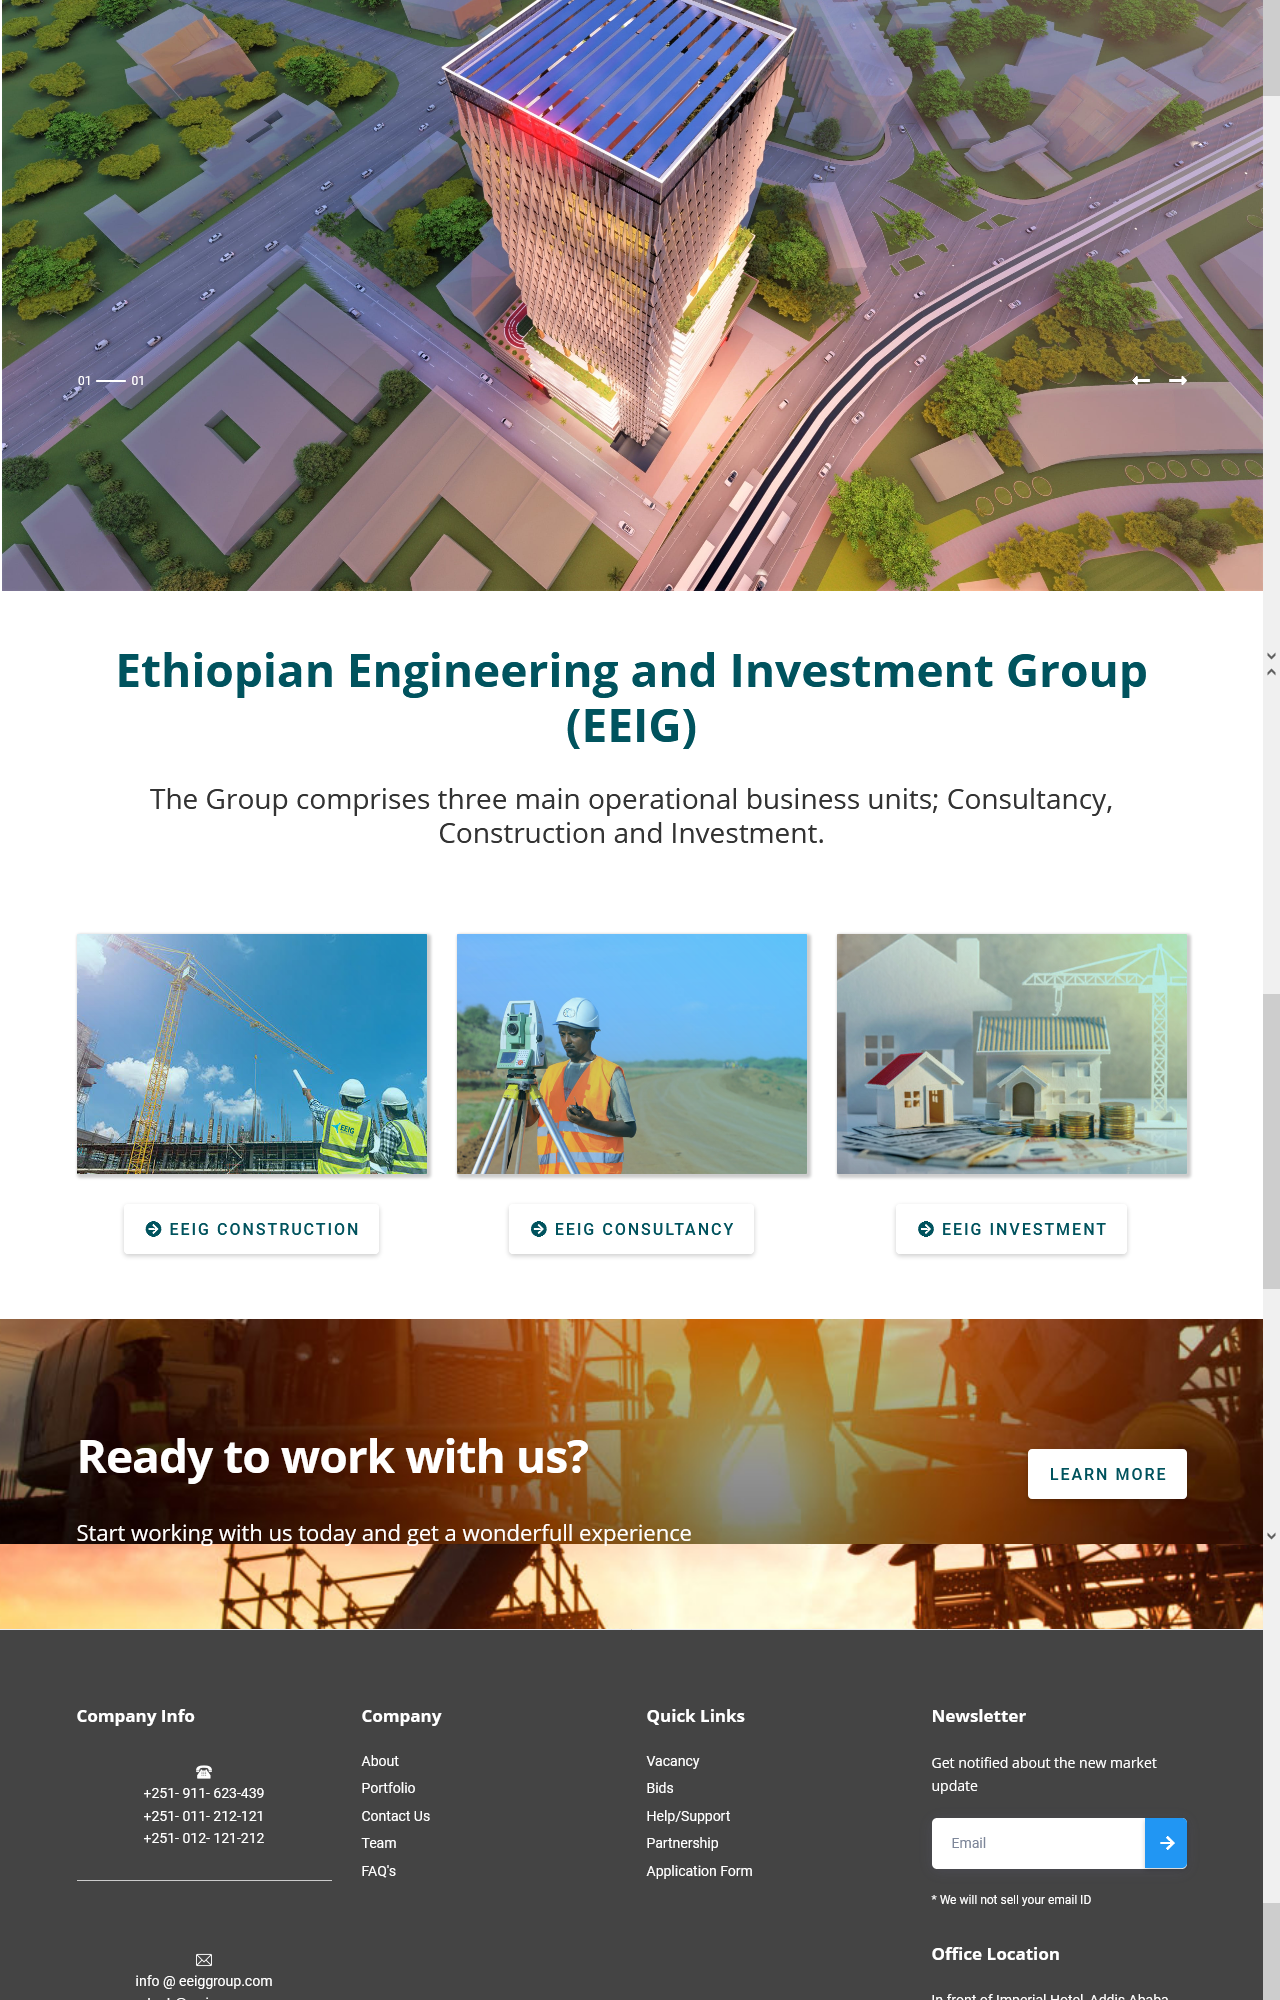 https://ahaduweb.com/wp-content/uploads/2016/08/Ethiopian-Engineering-and-Investment-Group-EEIG-1-1280x2000.png